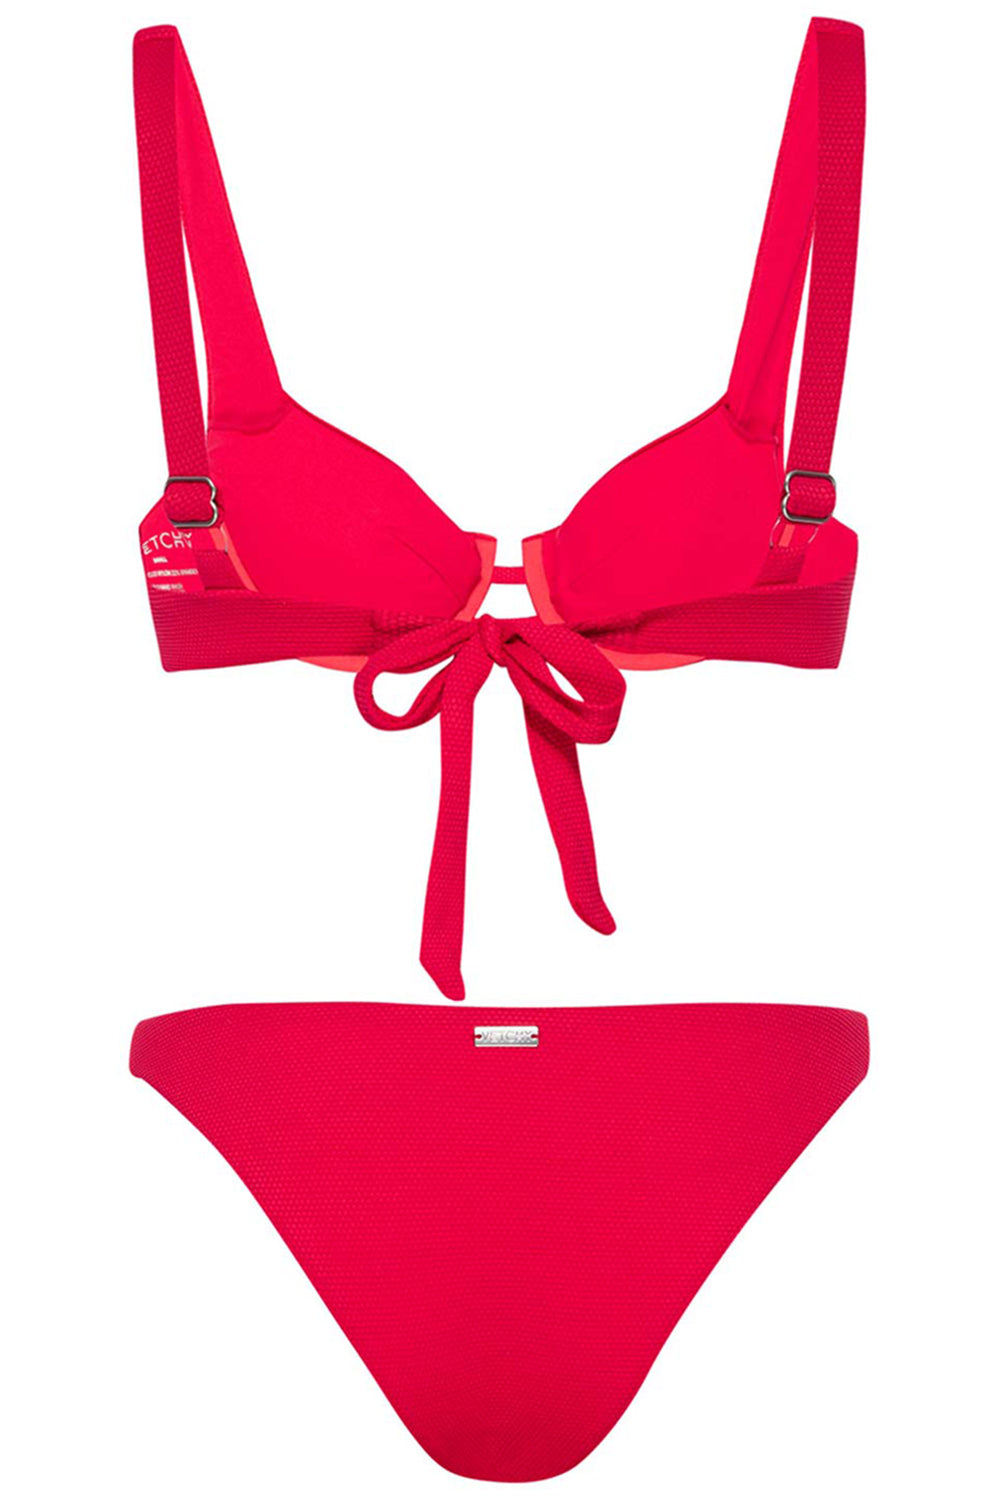 Margarita Bikini Red Set on white background back view.